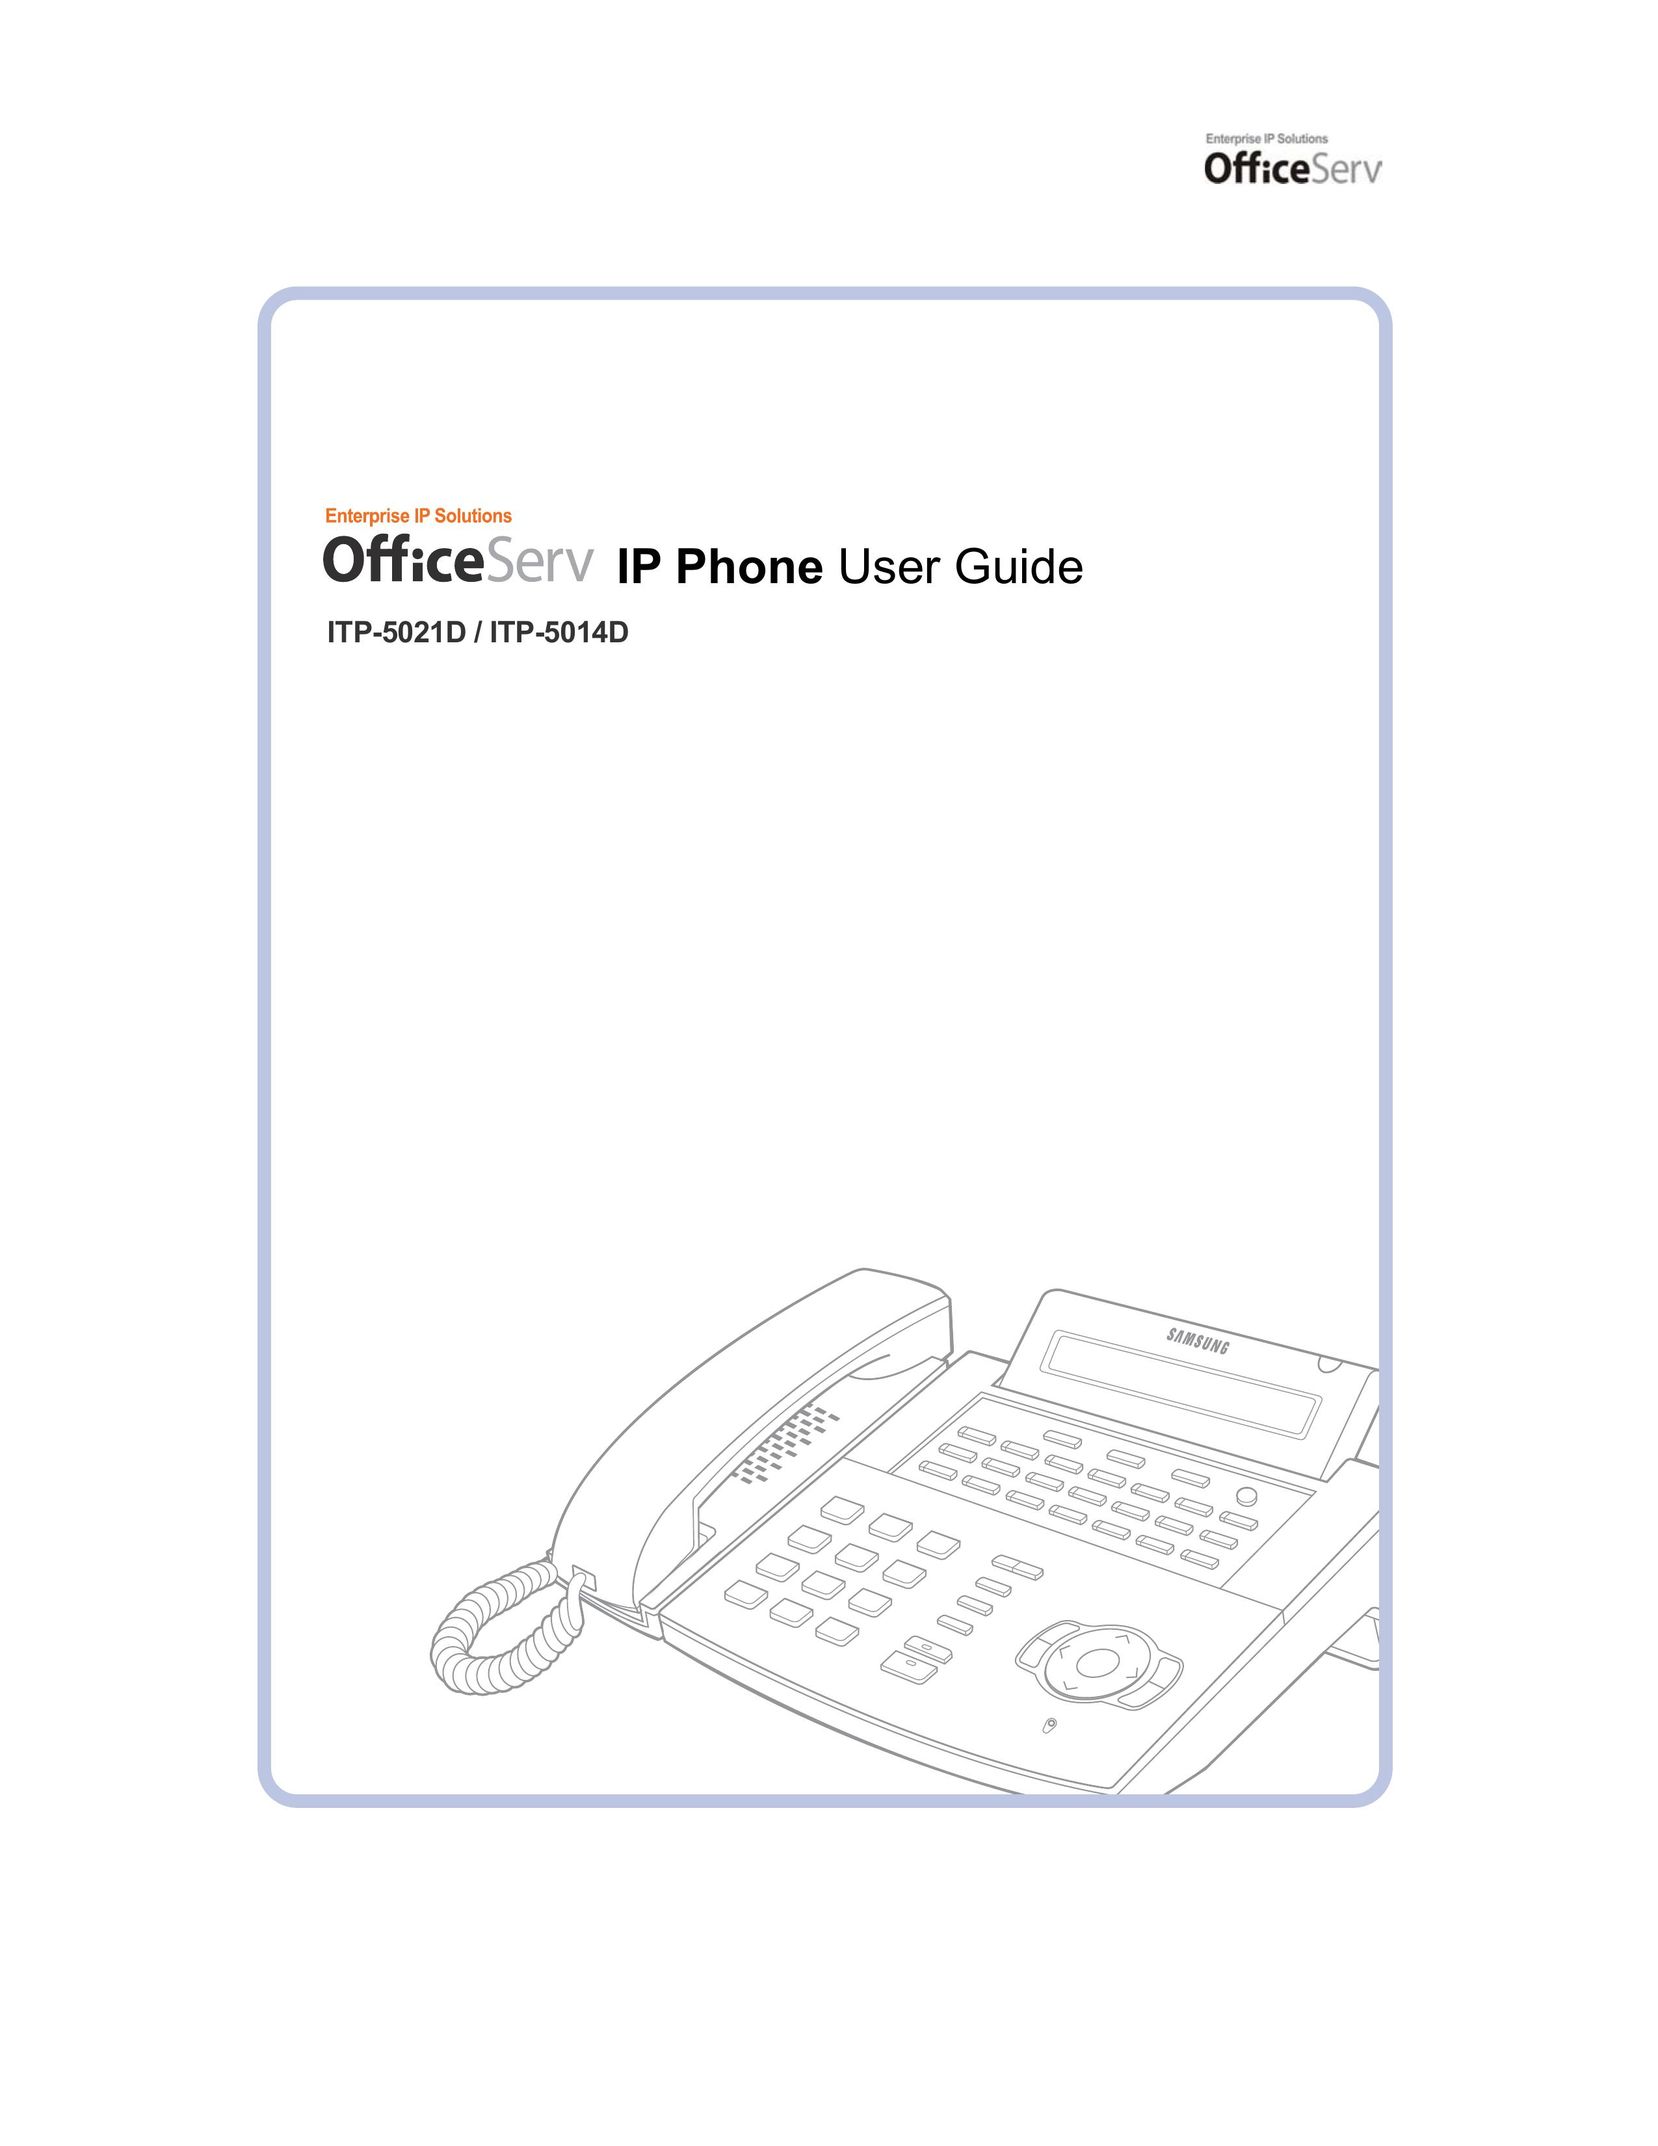 Samsung ITP-5014D IP Phone User Manual